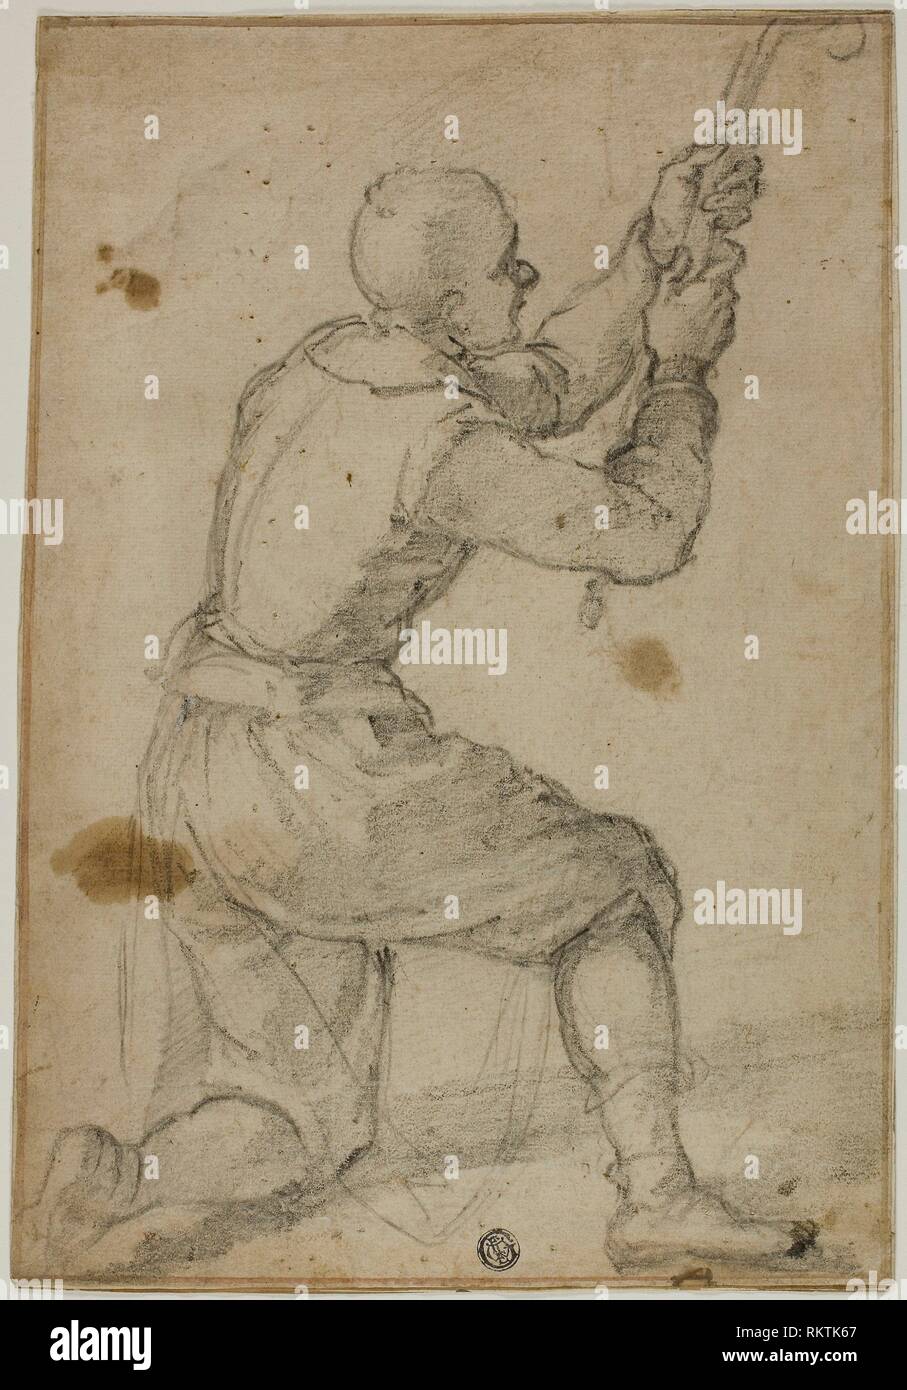 Mann auf den Knien, Ziehen am Seil-C. 1604 - Bernardino Poccetti Italienisch, 1548-1612 - Artist: Bernardino Poccetti, Herkunft: Italien, Datum: 1602-1606, Stockfoto